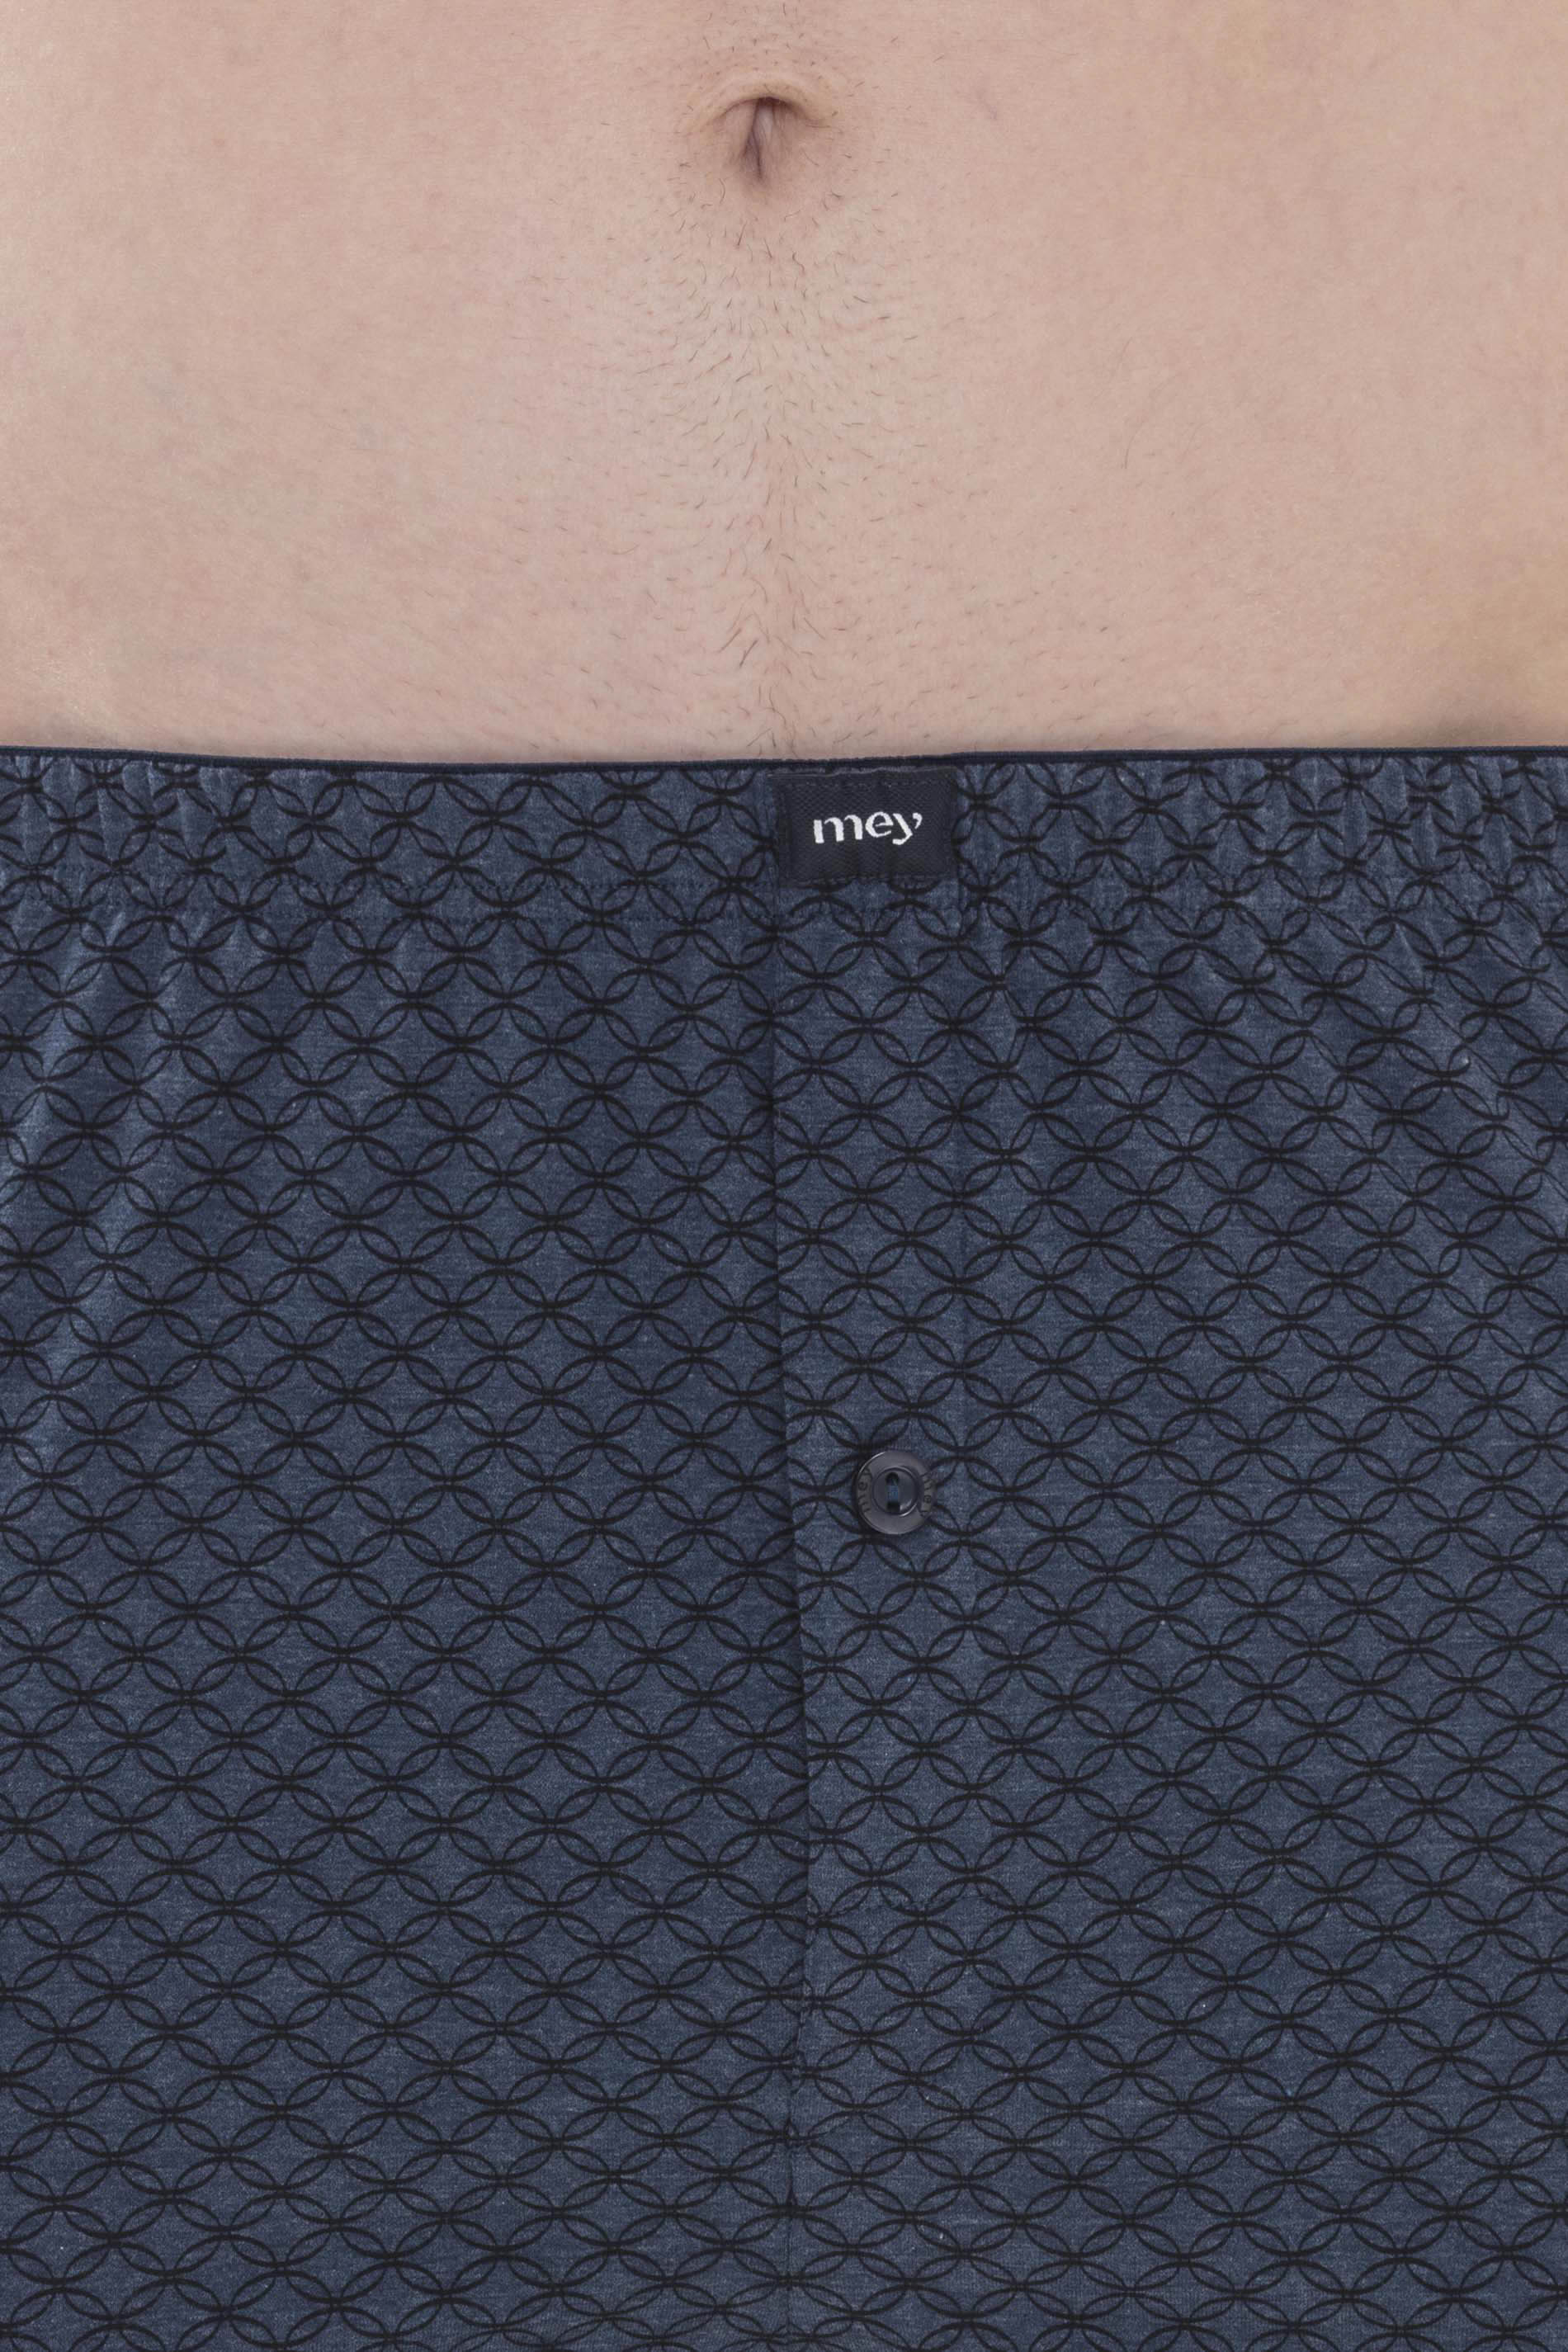 Boxer shorts Denim Blue Serie Circles Detail View 01 | mey®